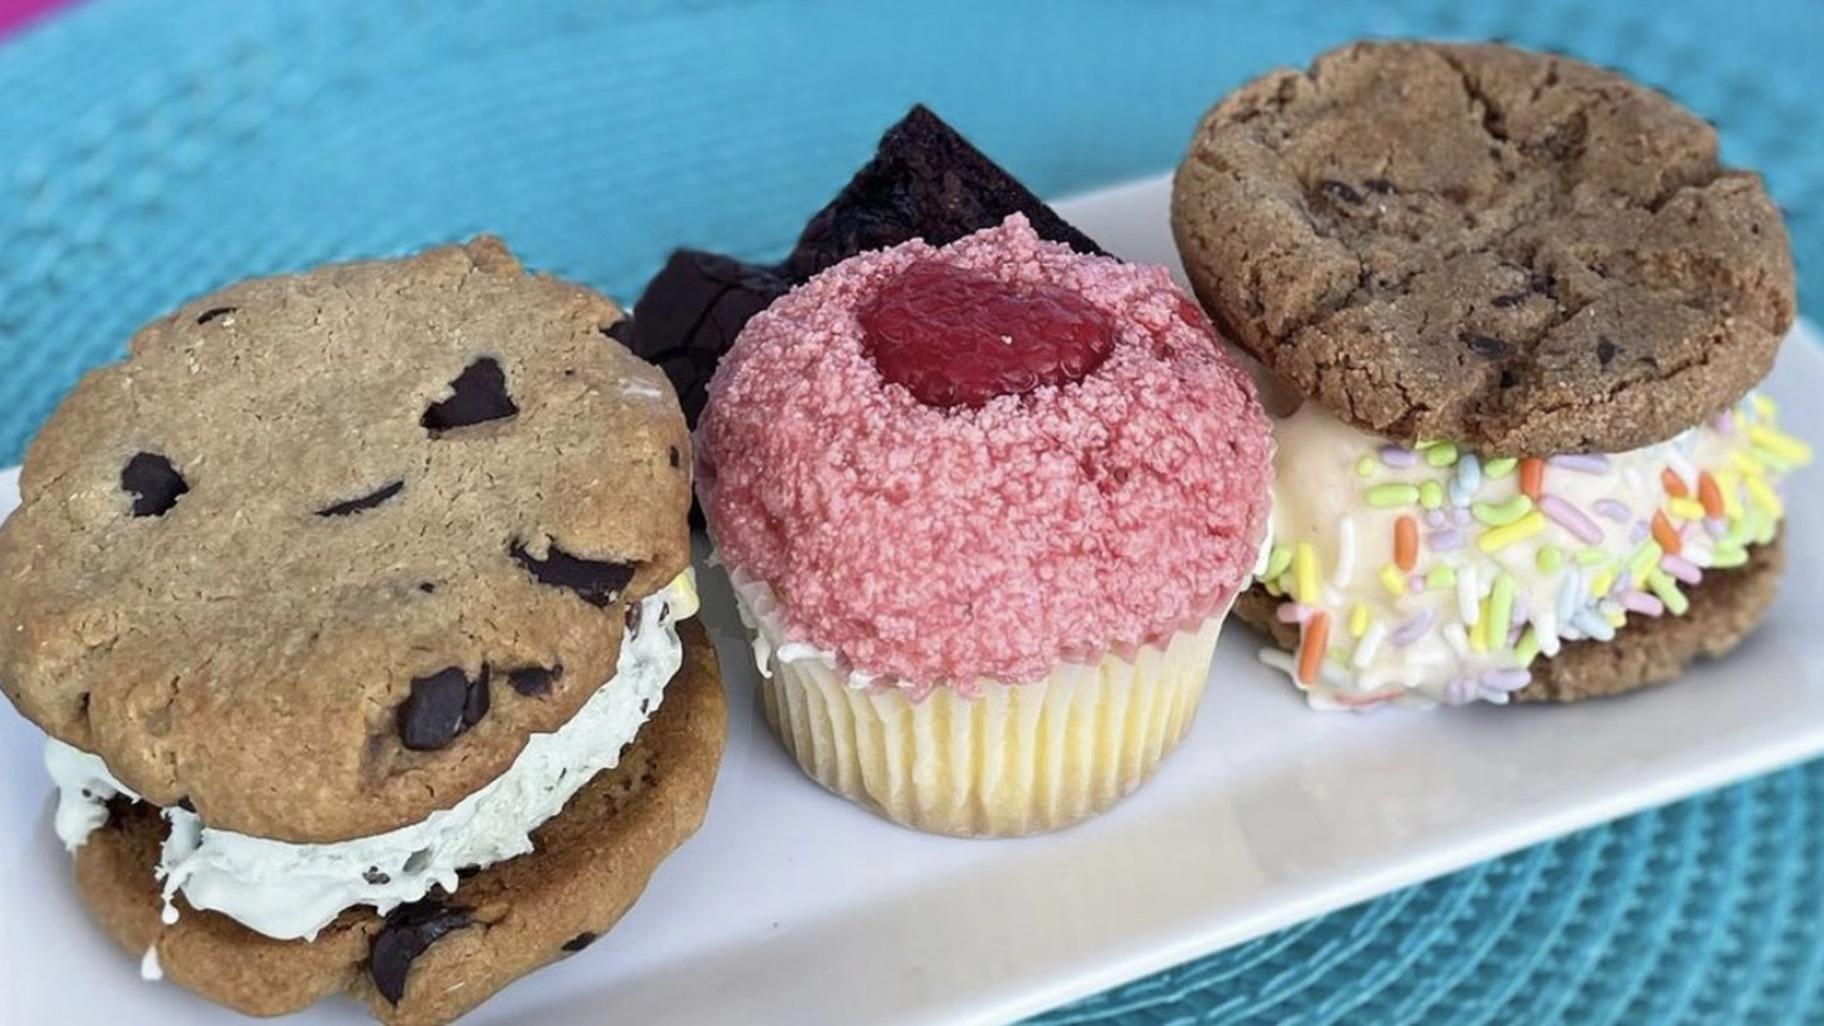 Scoops Dessert Bar will serve vegan and gluten-free boozy milkshakes, ice cream sandwiches, cupcakes and mini-doughnuts. (Credit: Brittany Gumbiner)